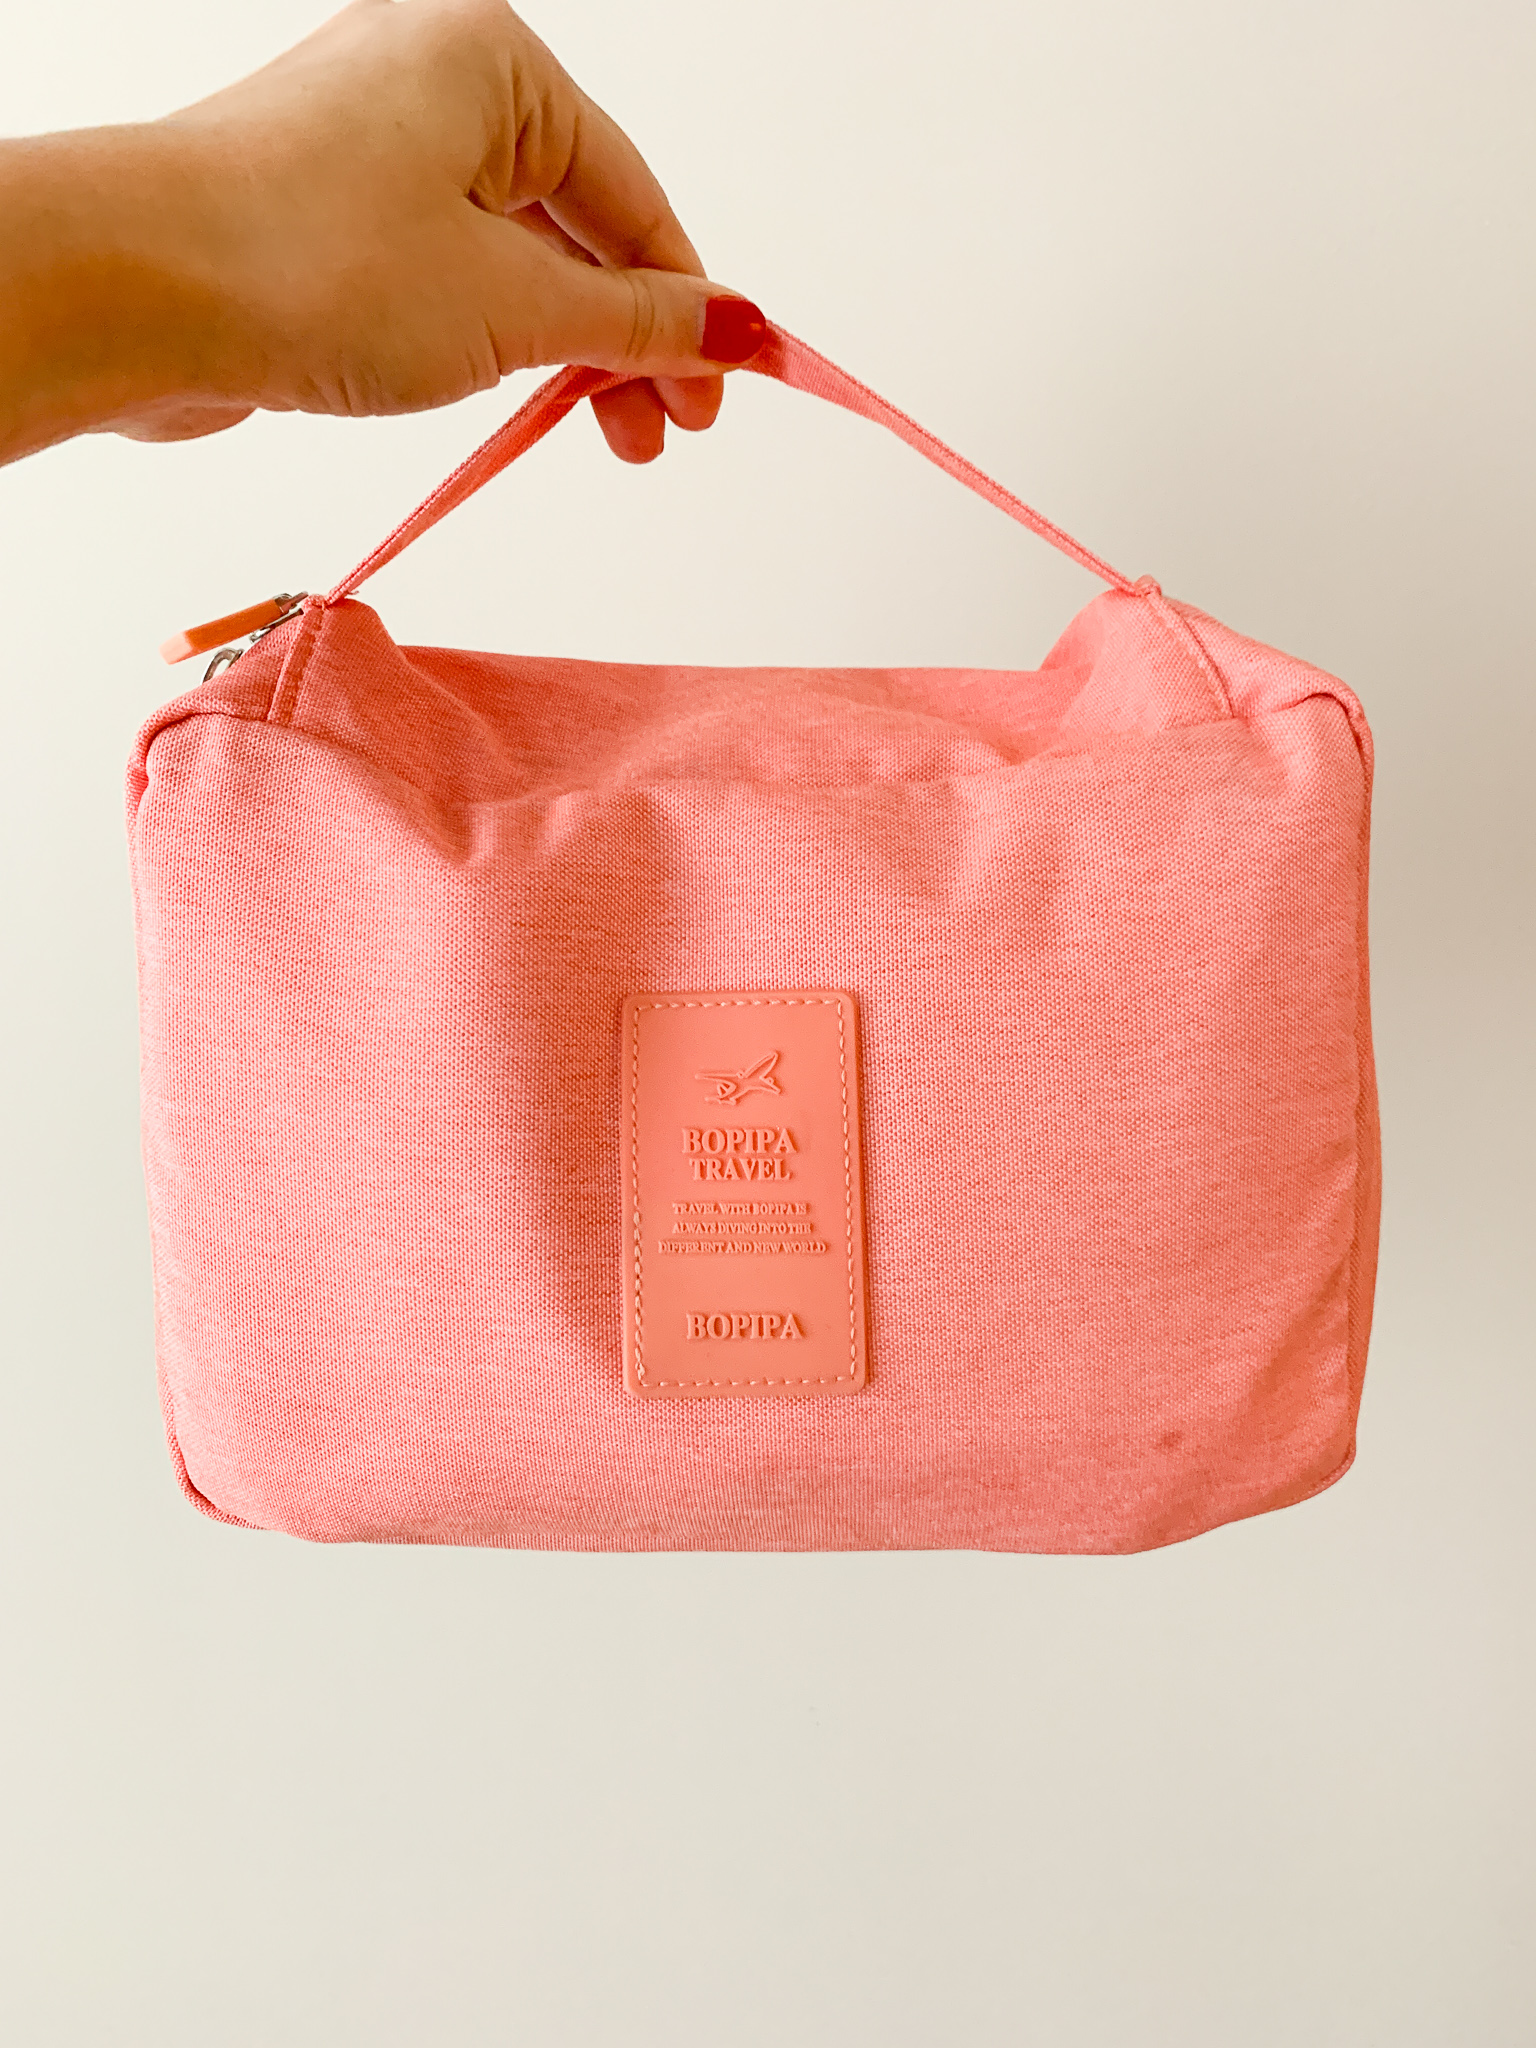 Bopipa travel pouch in pink